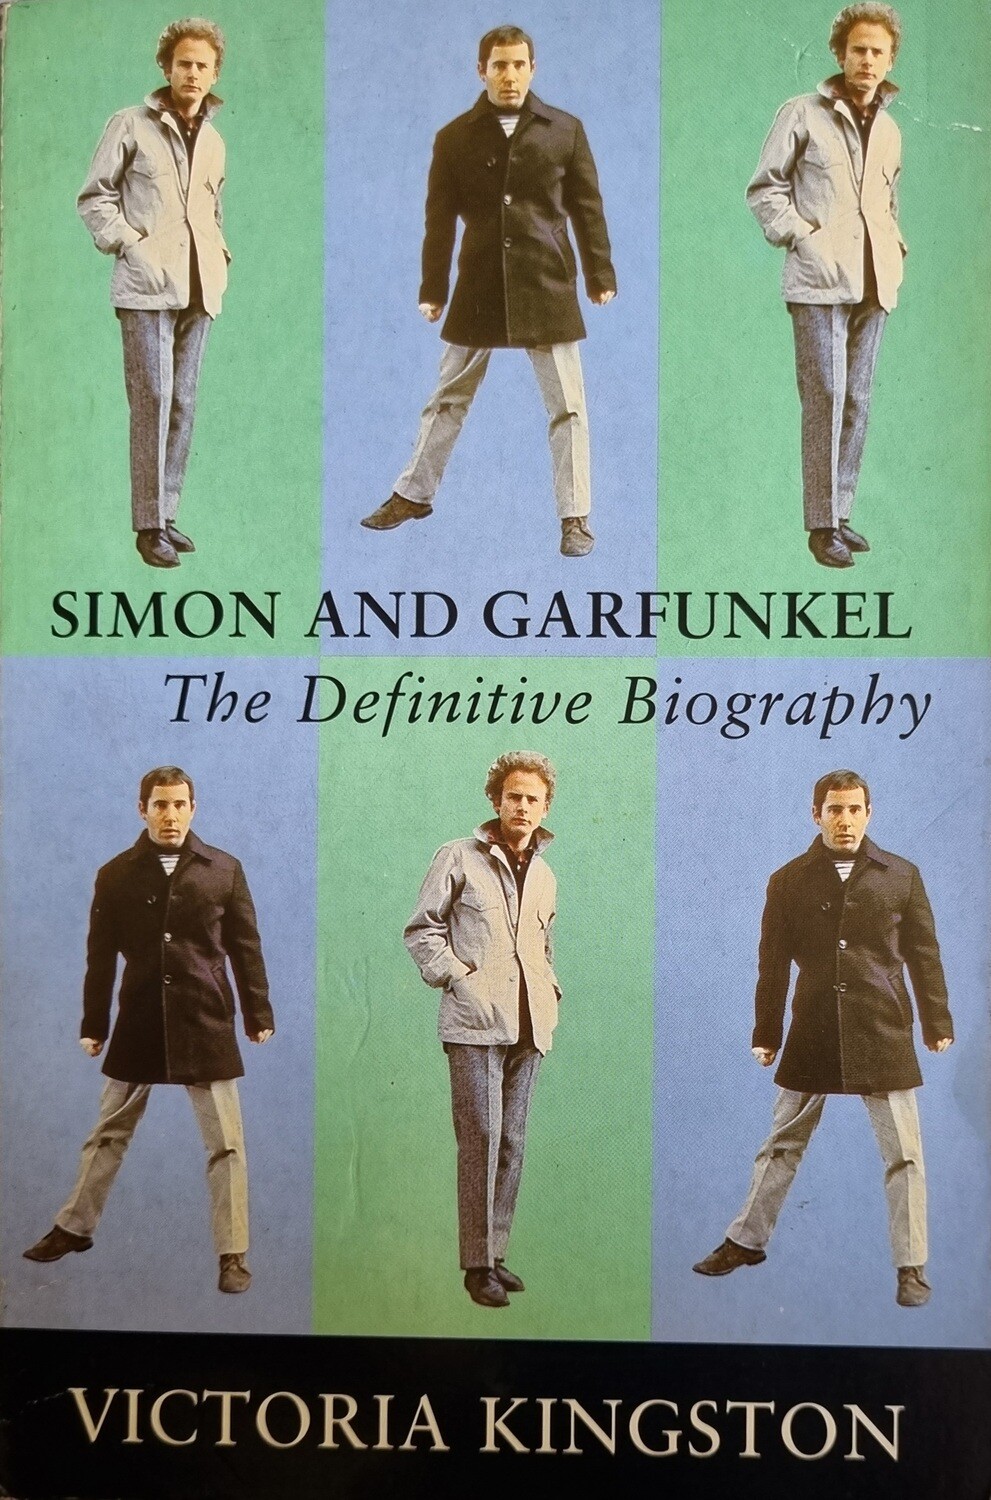 Simon and Garfunkel: The Definitive Biography Victoria Kingston [ 1996]